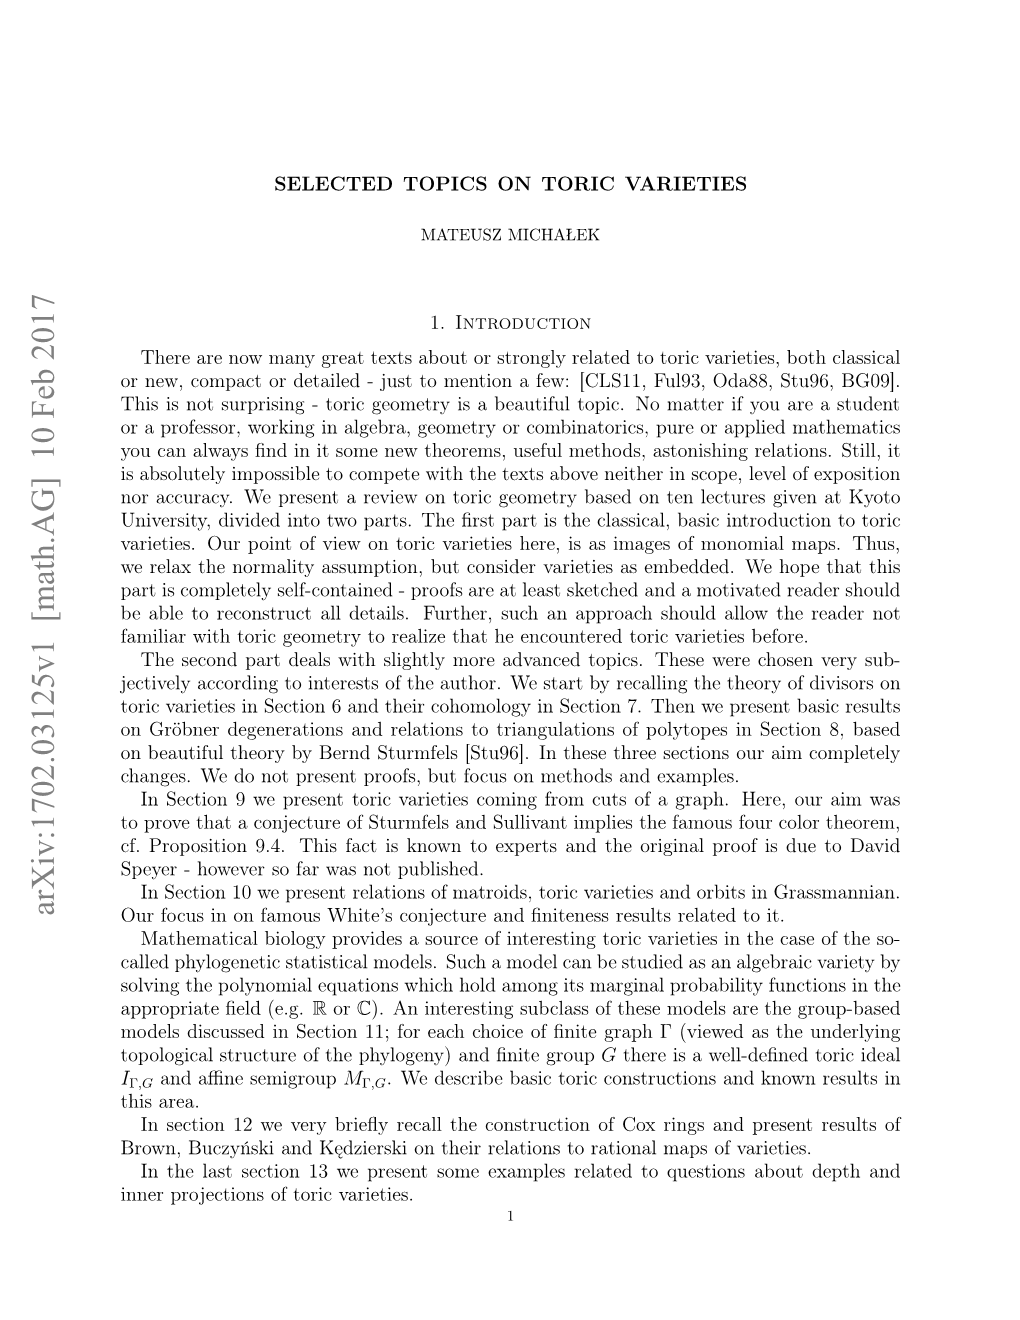 Selected Topics on Toric Varieties 3